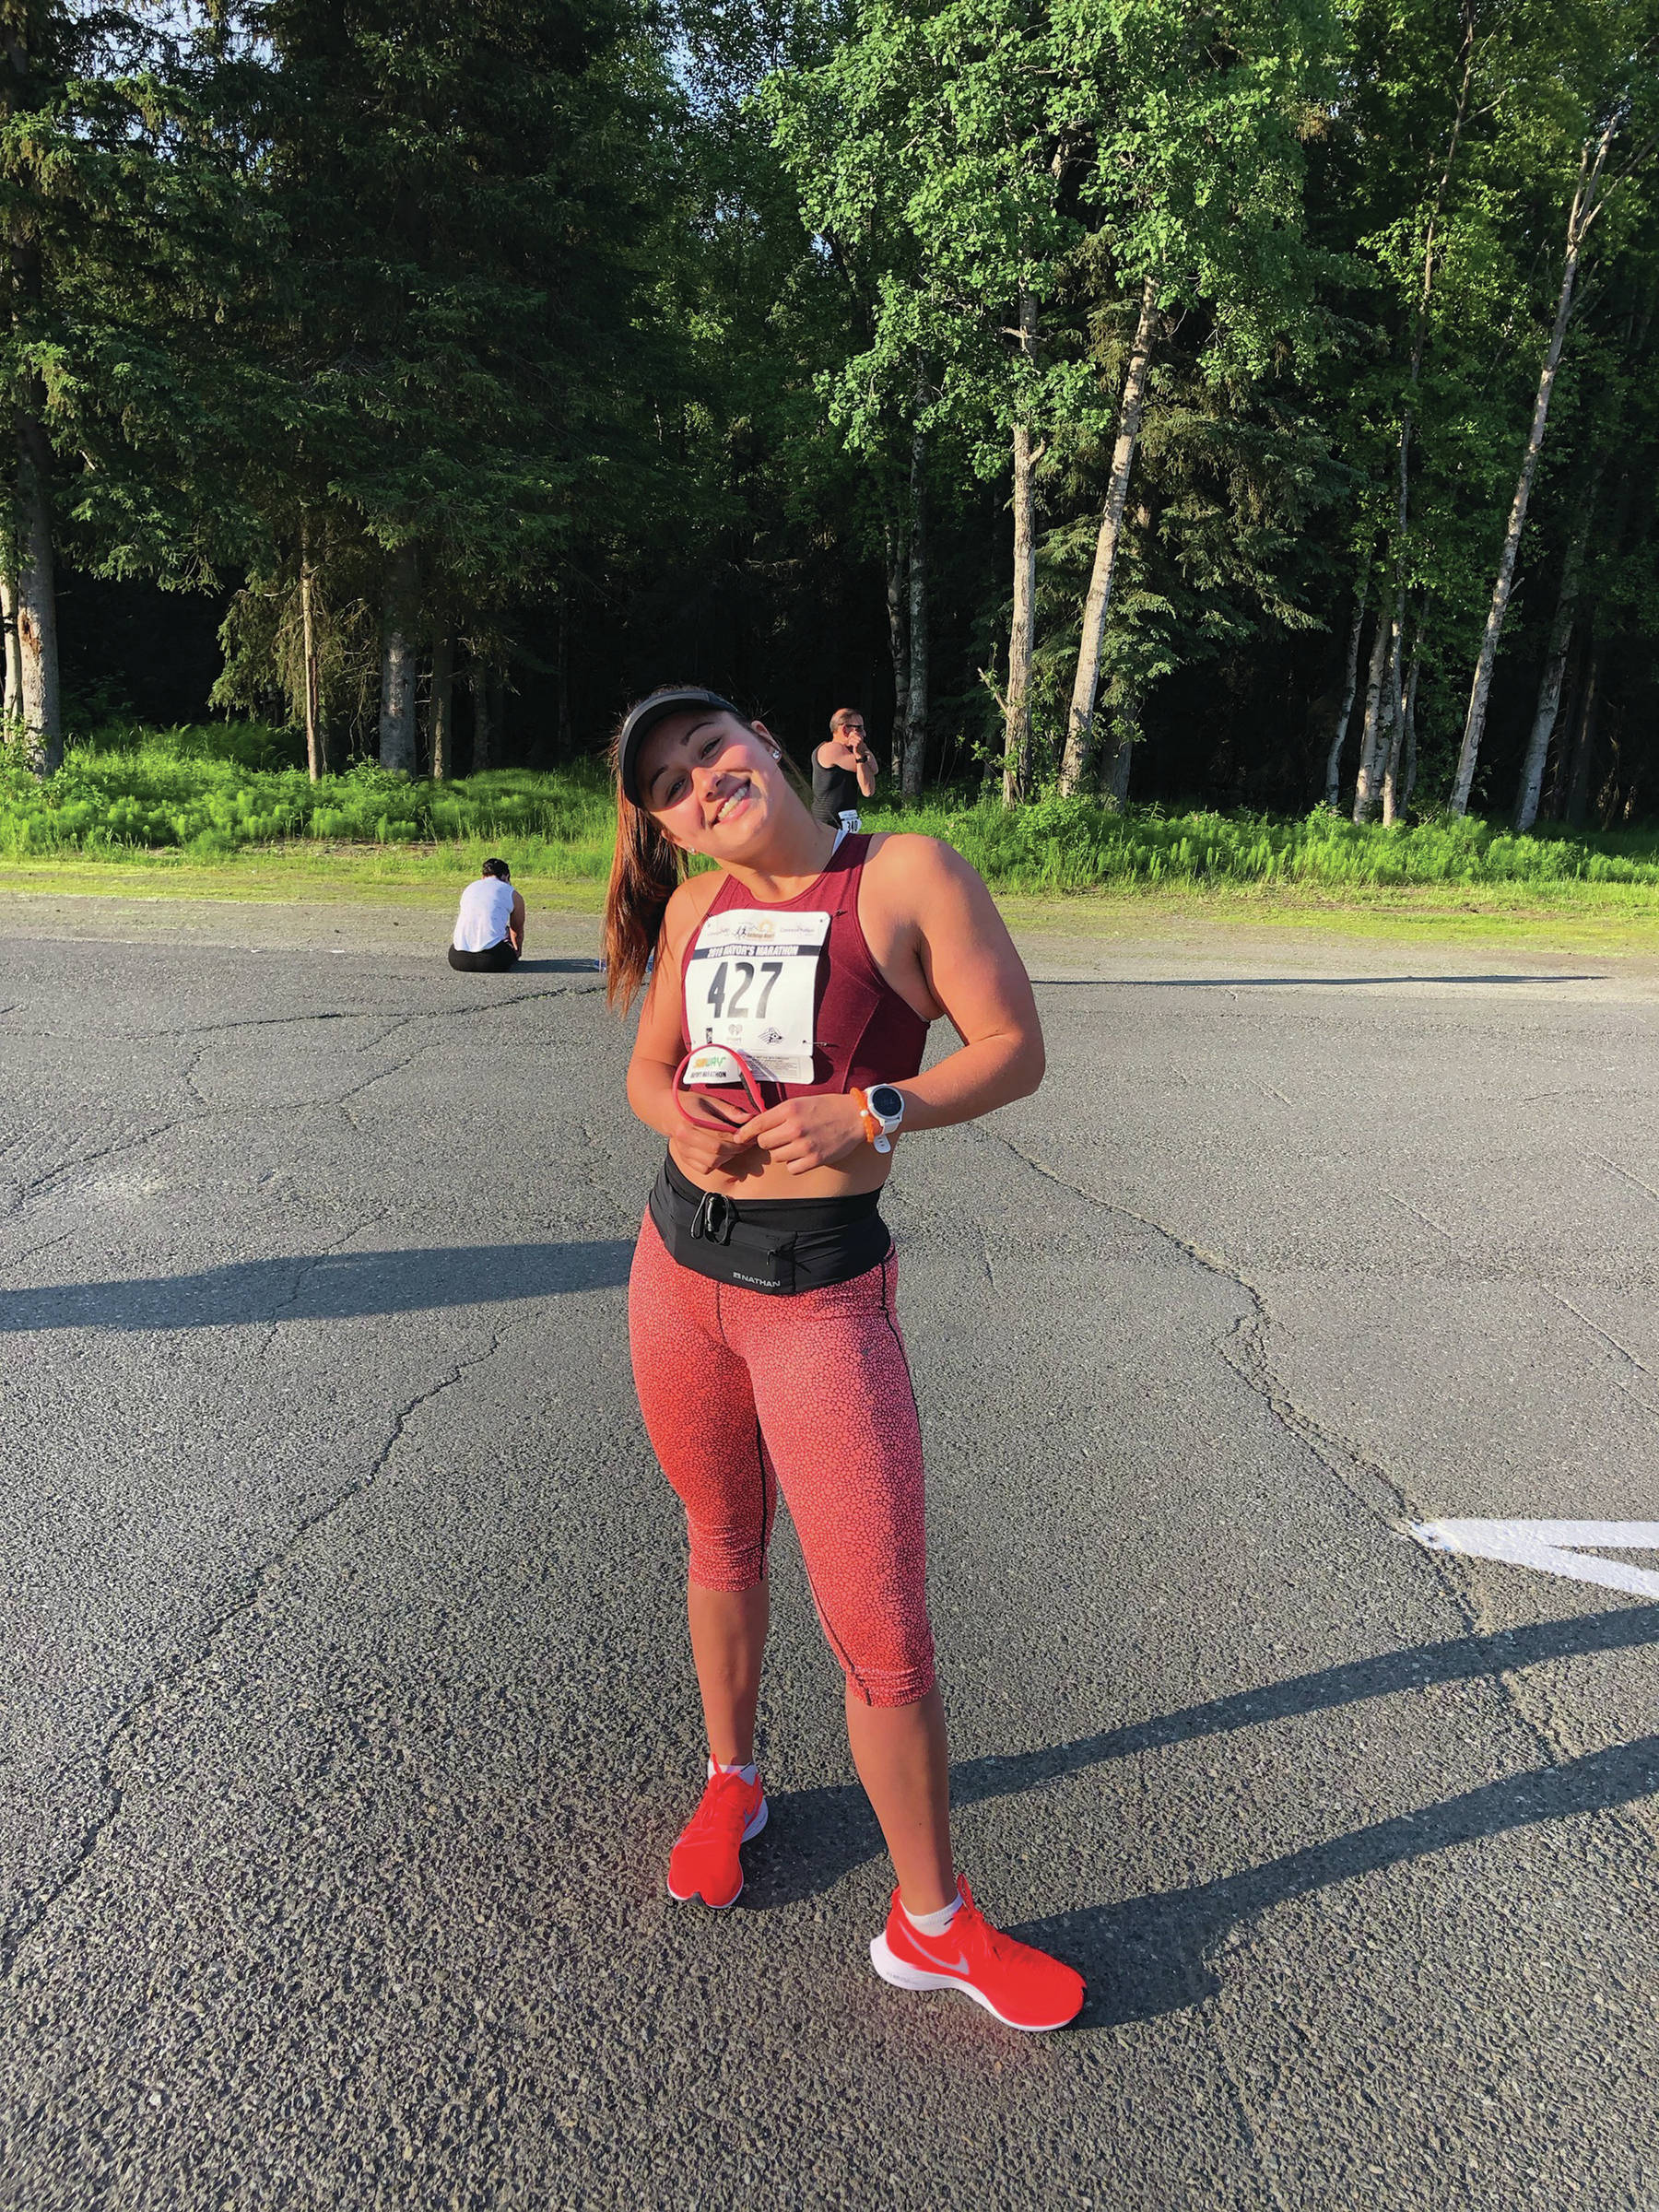 Lauren Kuhns at the 2019 Anchorage Mayor’s Marathon, held last June in Anchorage, Alaska. (Photo provided)